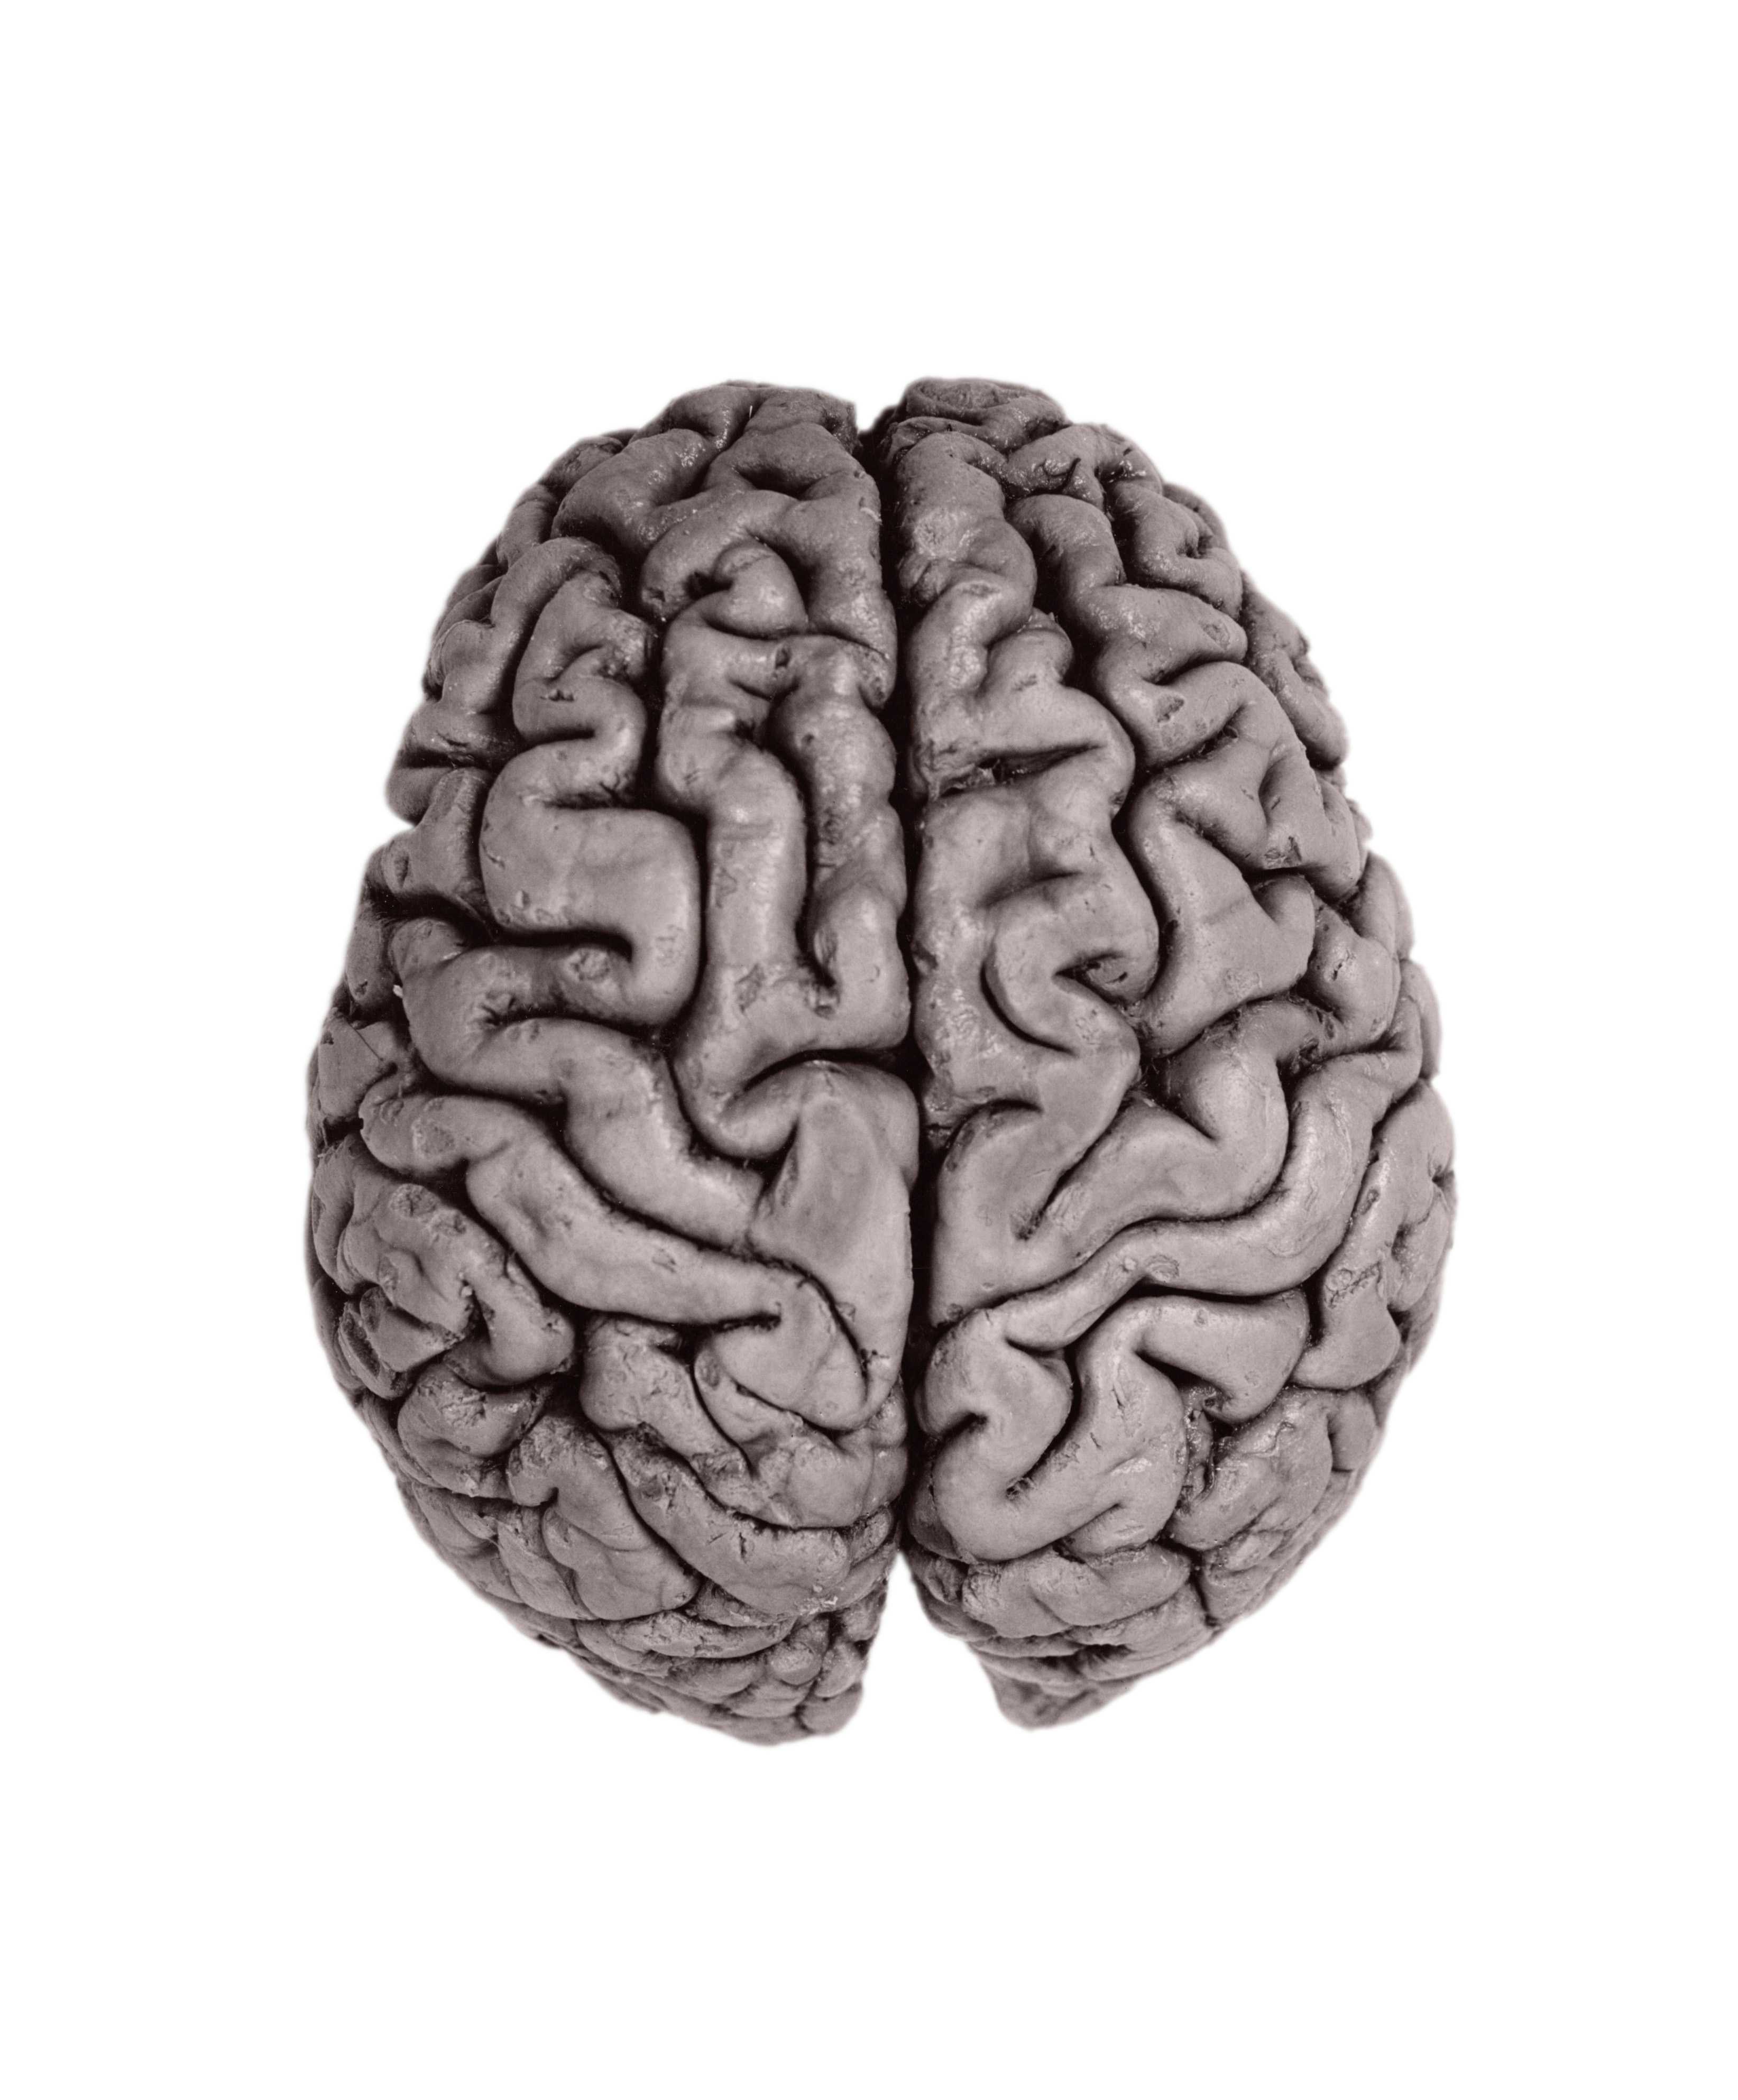 Two hemispheres of a human brain.